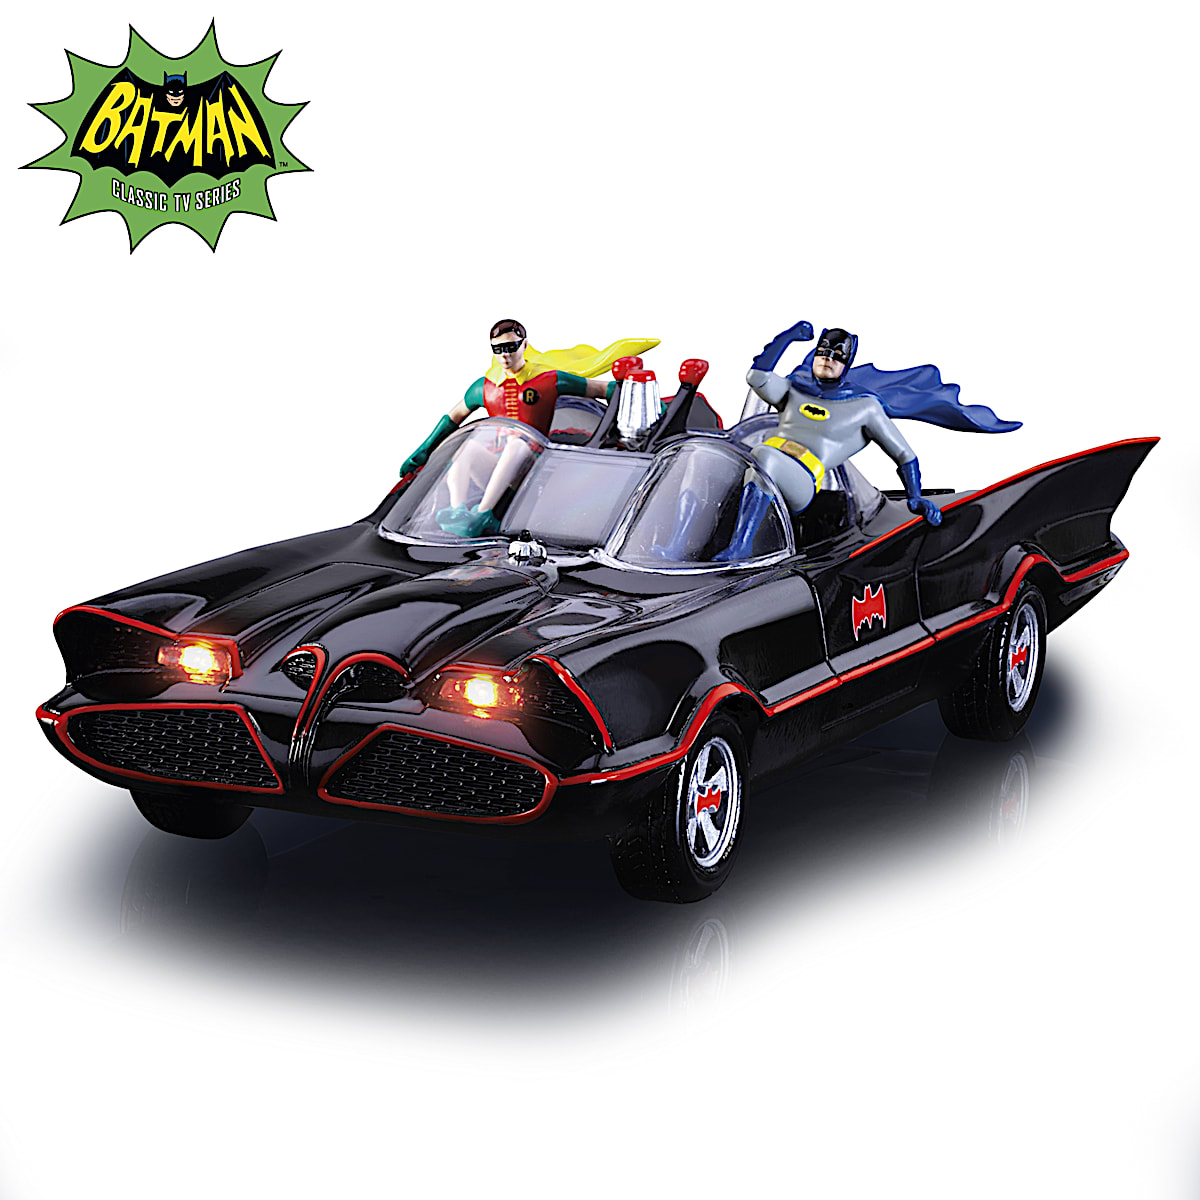 Batman Classic TV Series Batmobile Statue: Blue Variant